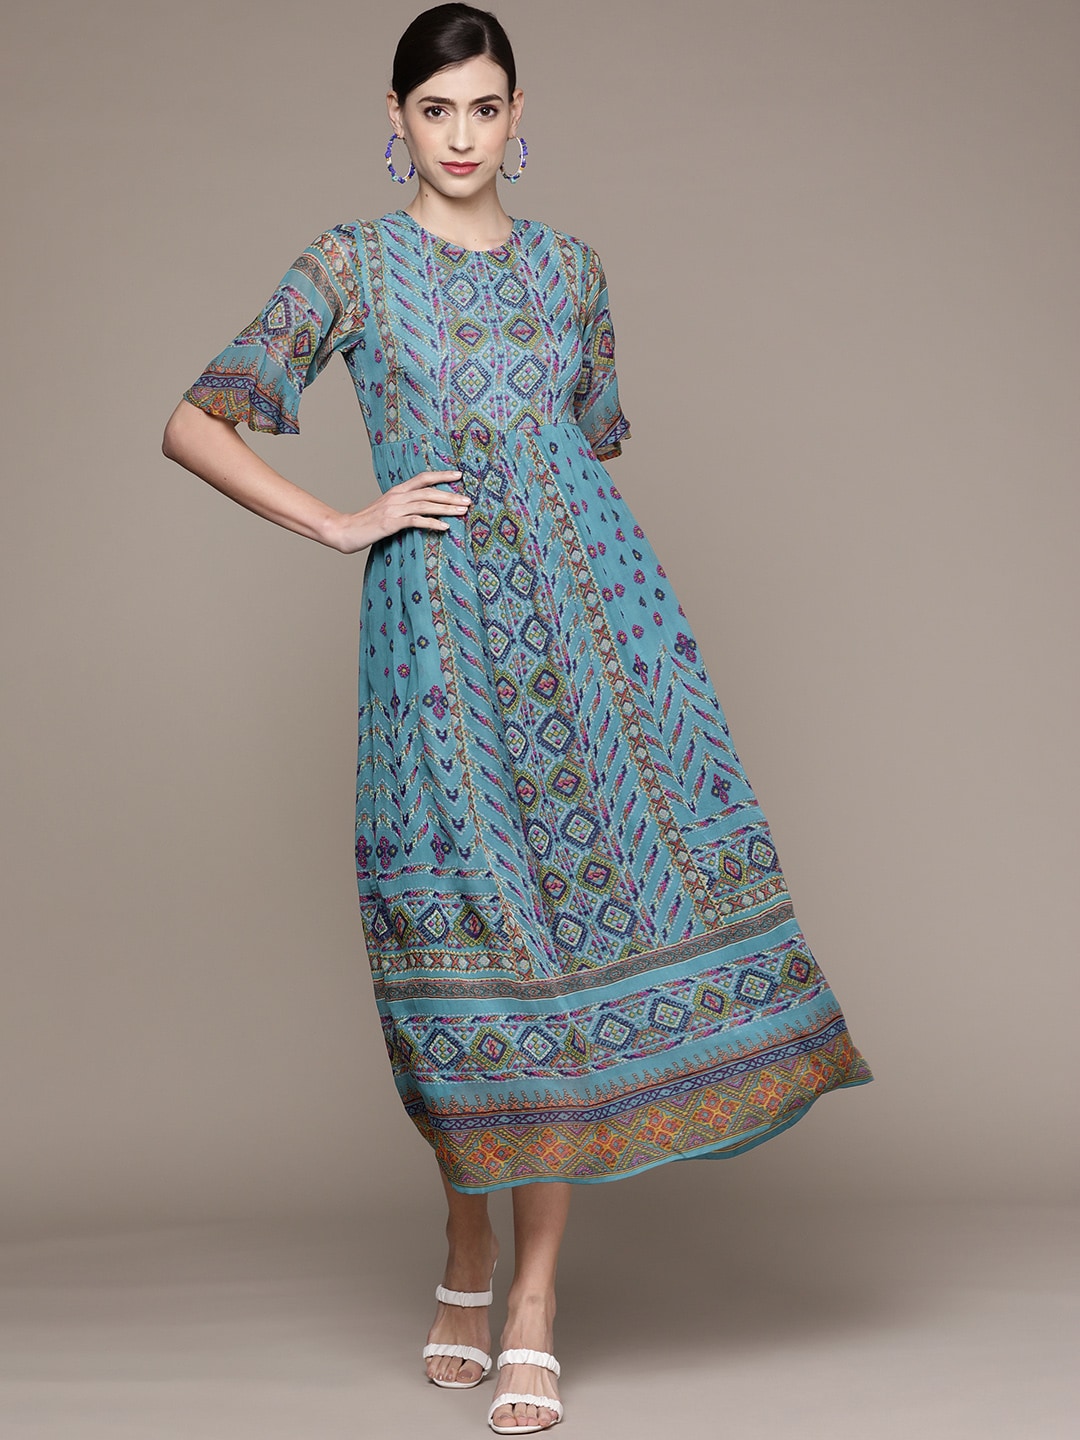 Label Ritu Kumar Women Teal Blue & Mustard Yellow Ethnic Motifs A-Line Midi Dress Price in India